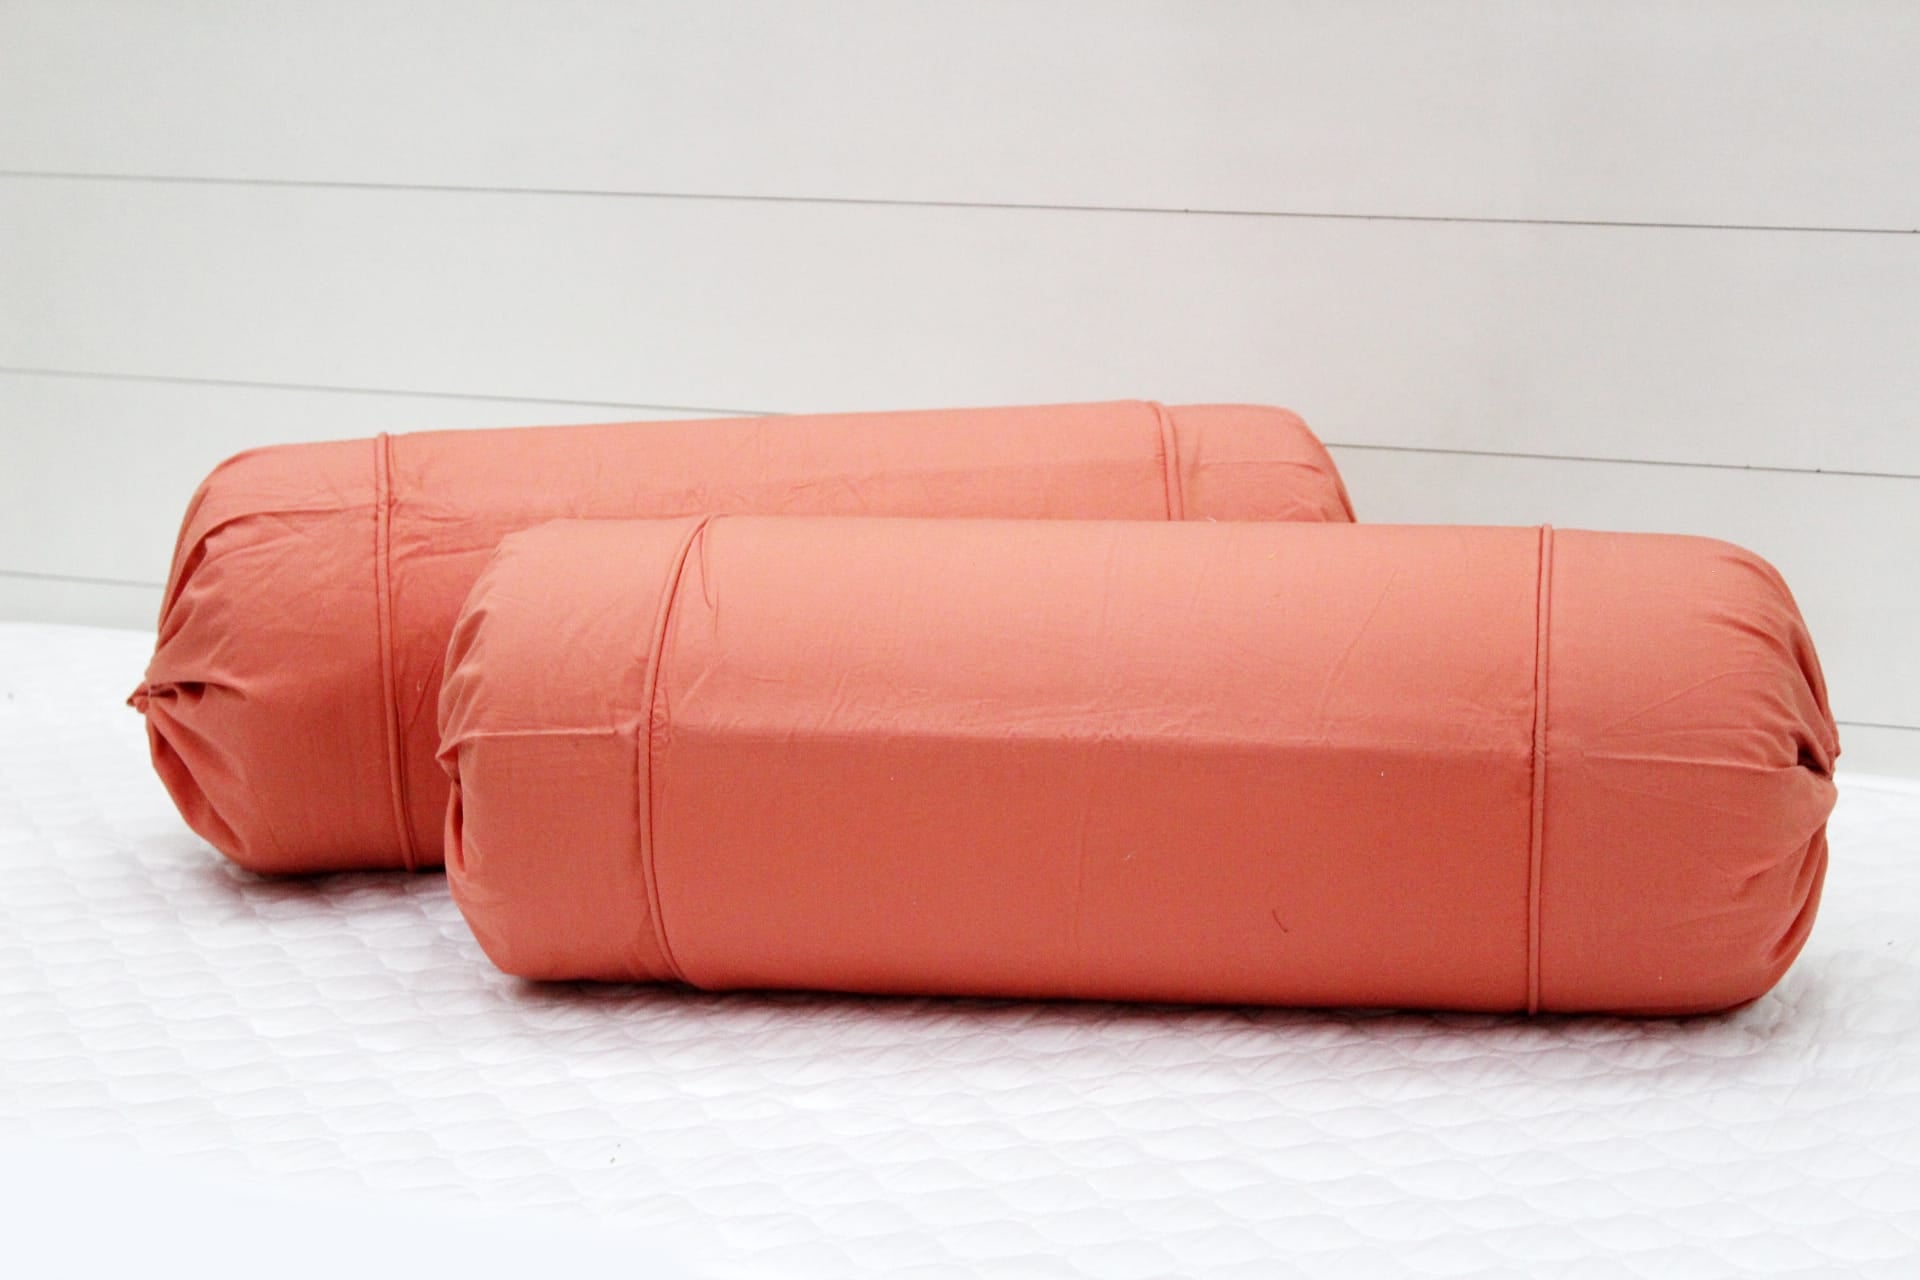 Comfortable Plain Cotton Bolster Cover Set 2pcs in Peach online